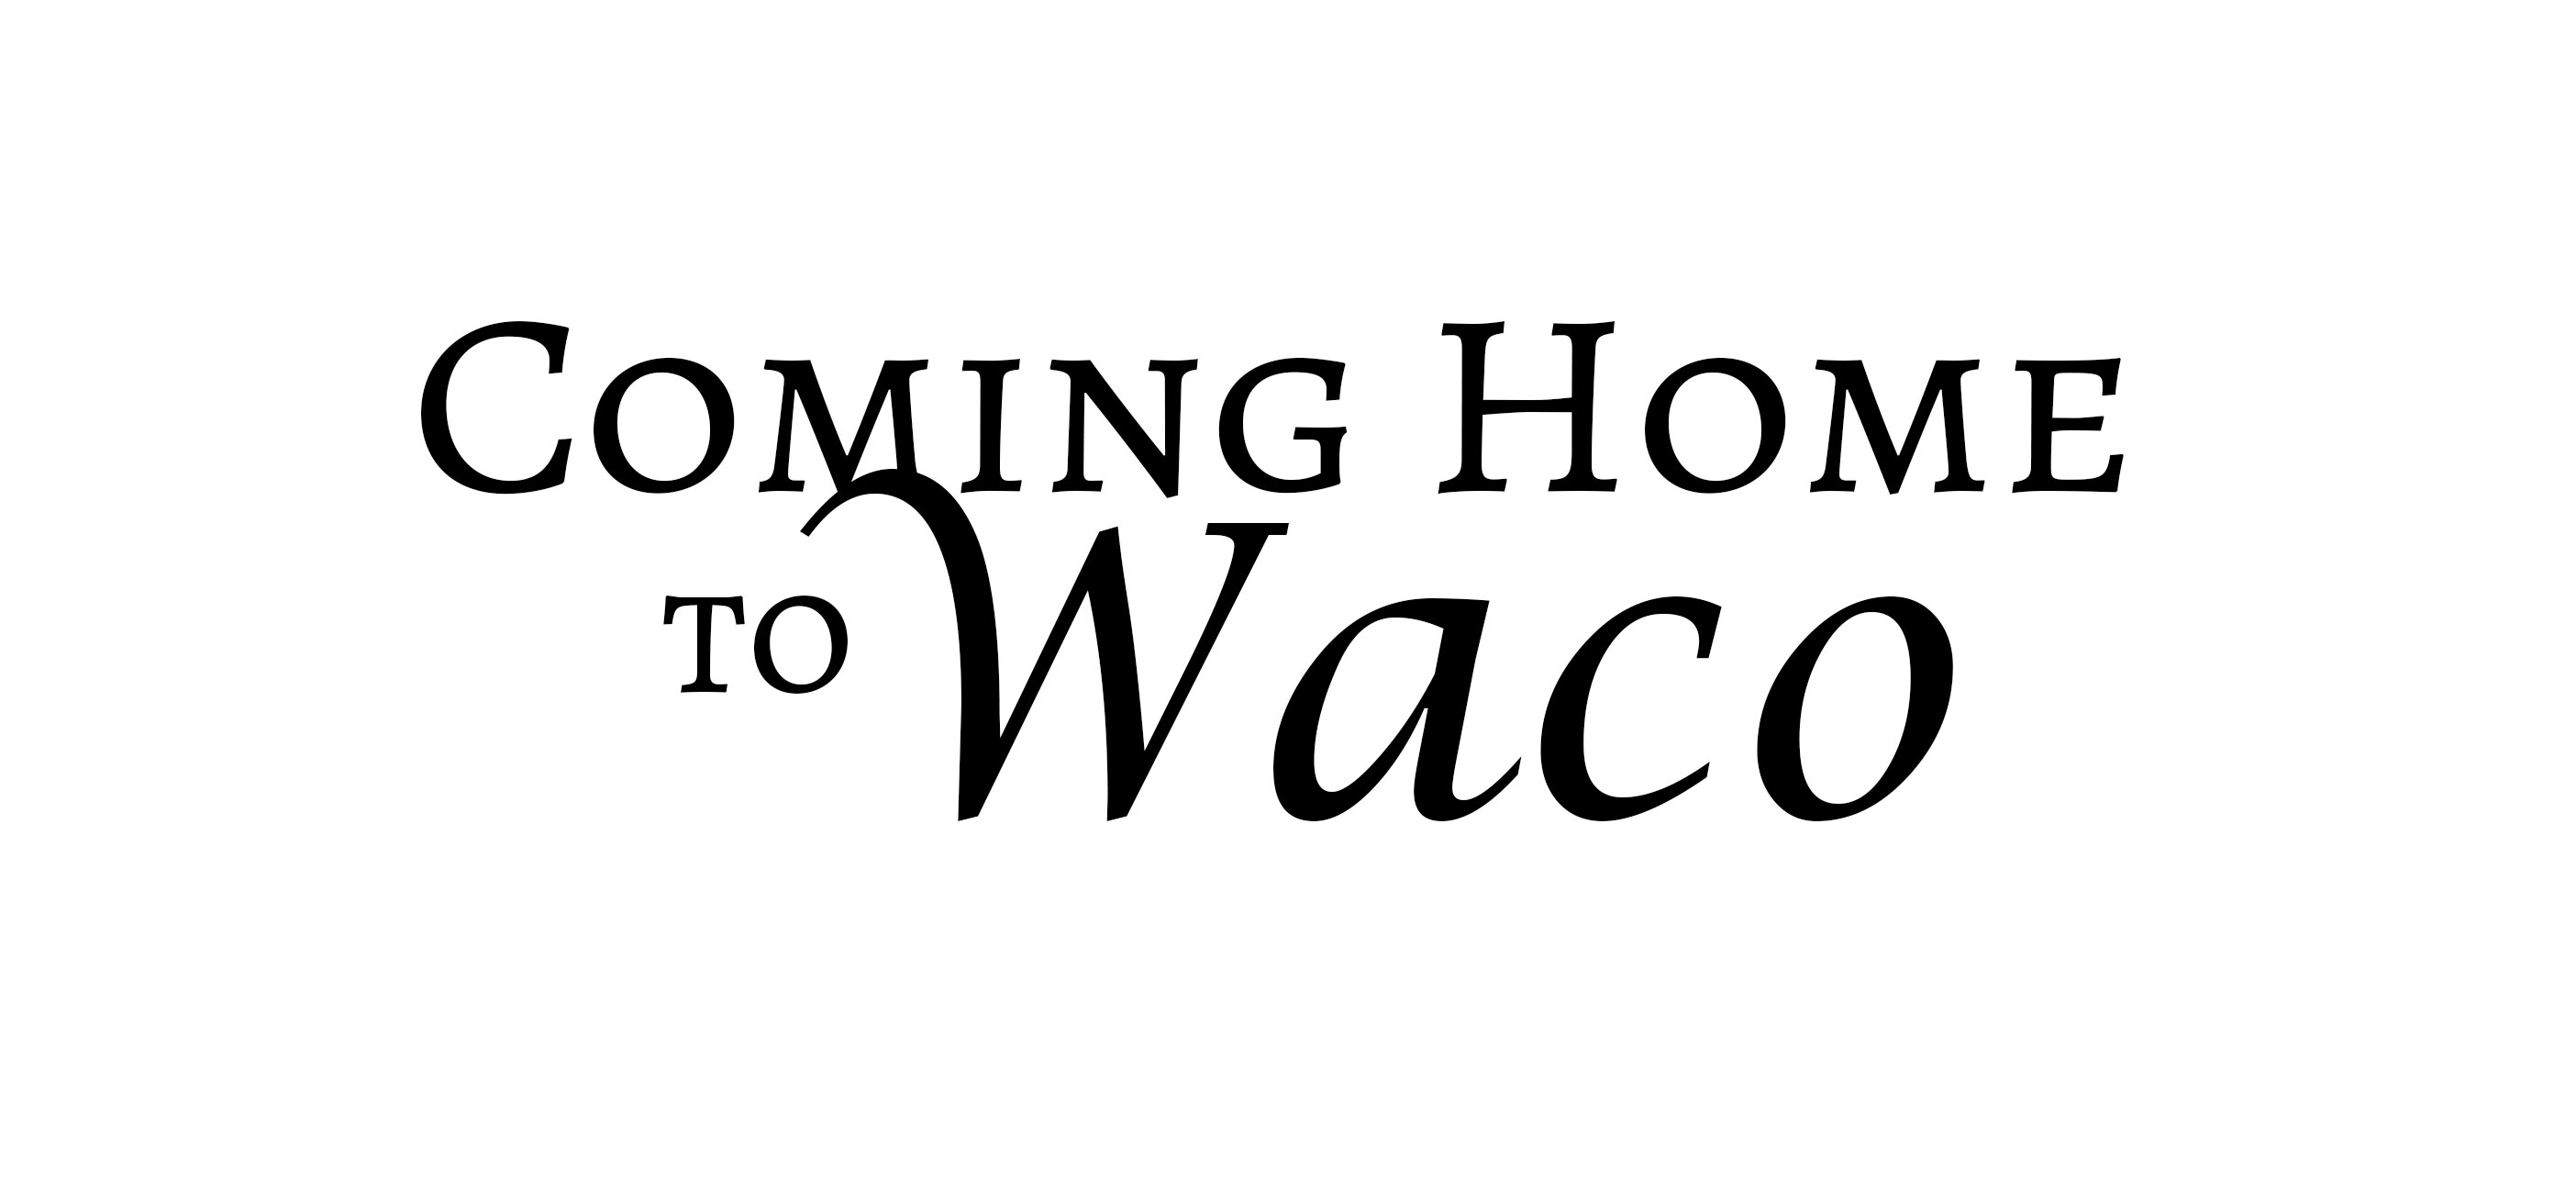 Waco Tourist Information Center & Gift Shop – Waco & The Heart of Texas